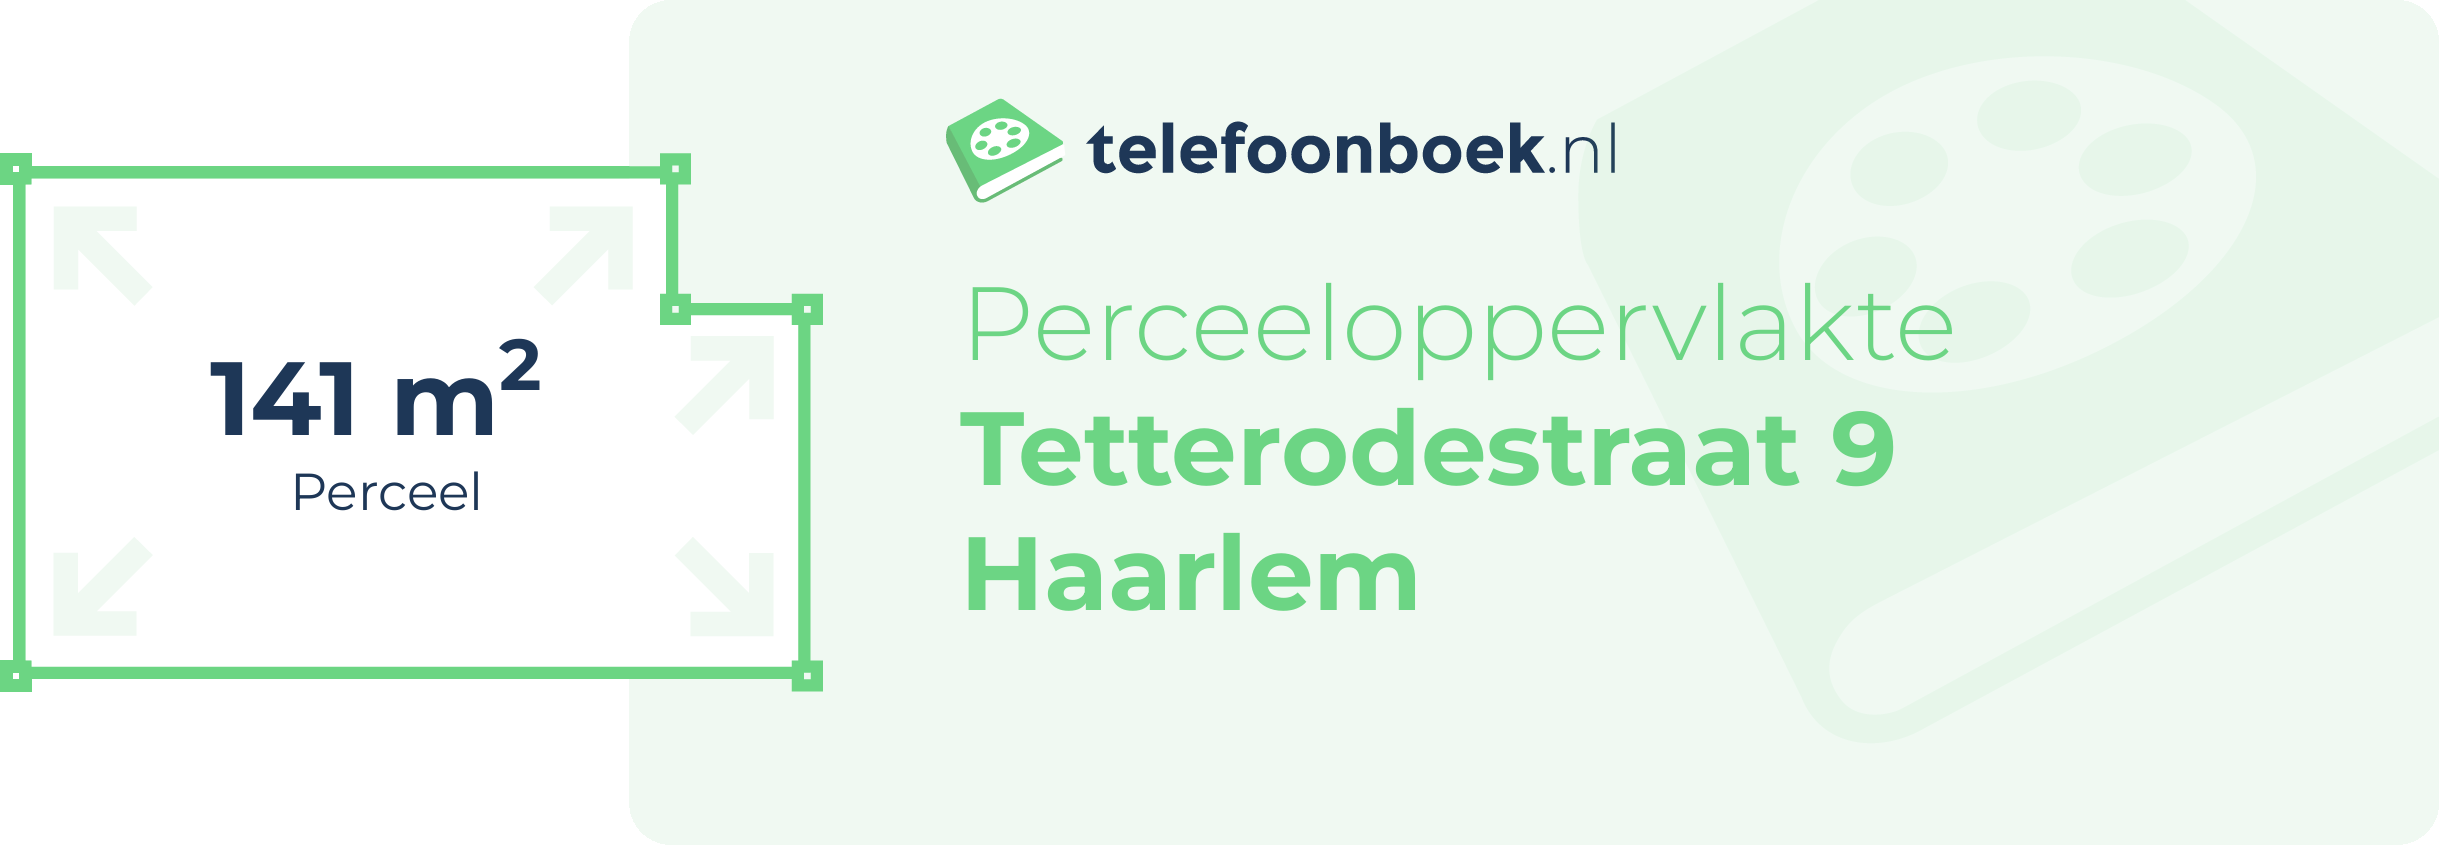 Perceeloppervlakte Tetterodestraat 9 Haarlem